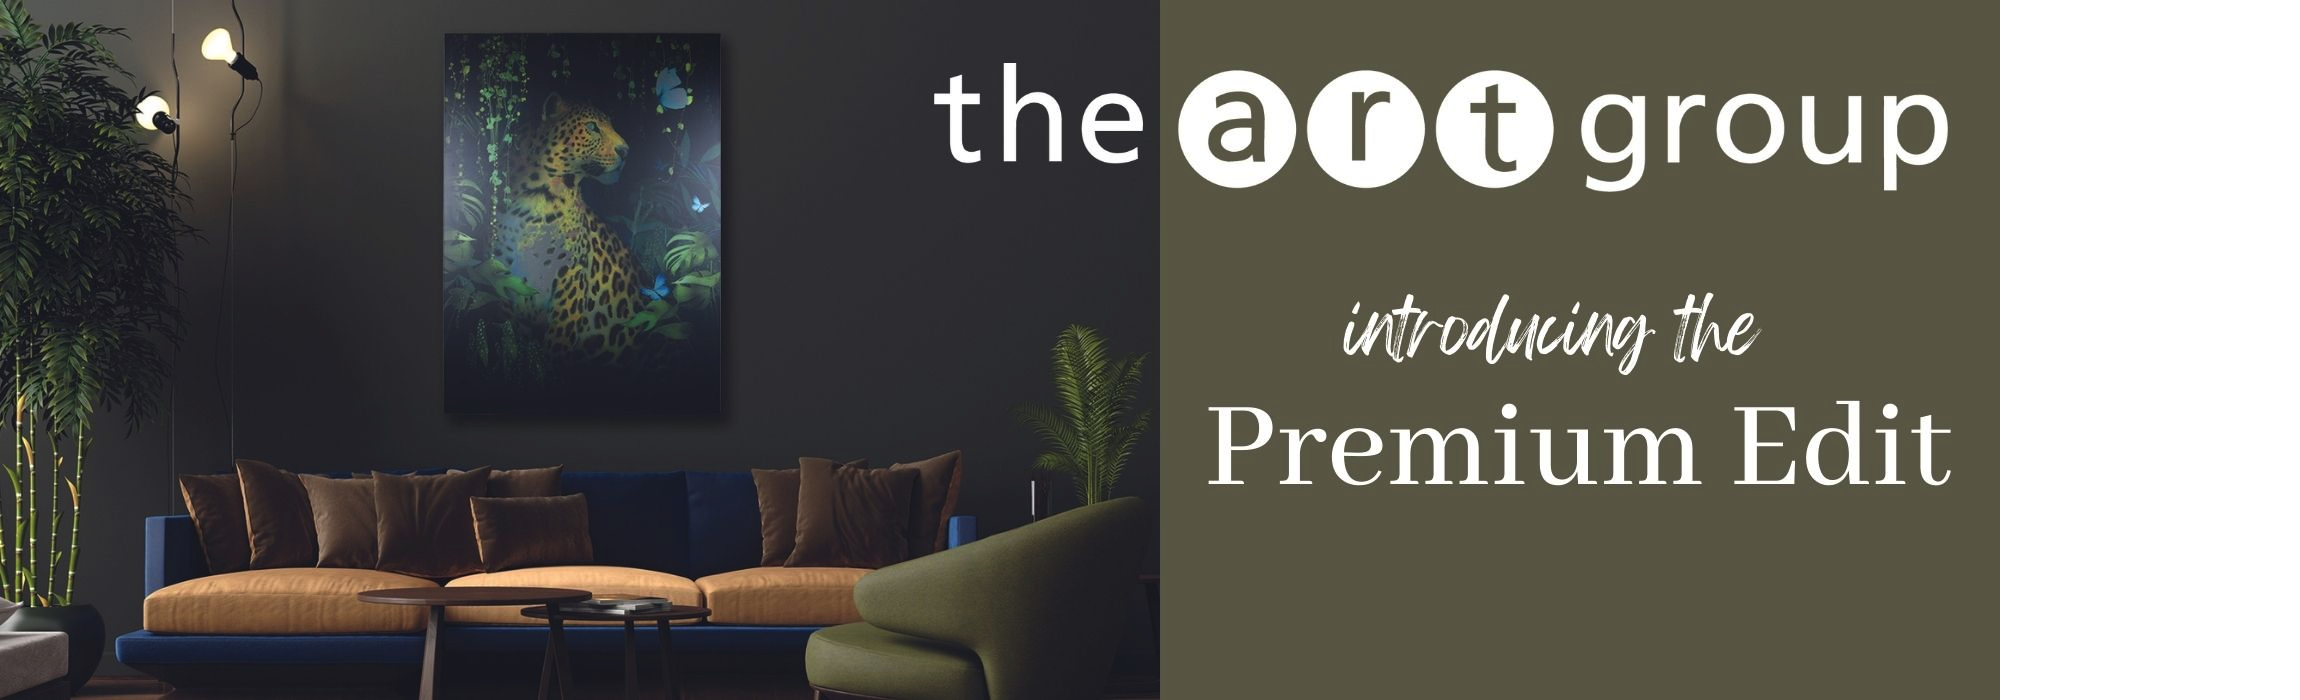 The Art Group introduces their exclusive Premium Edit Range